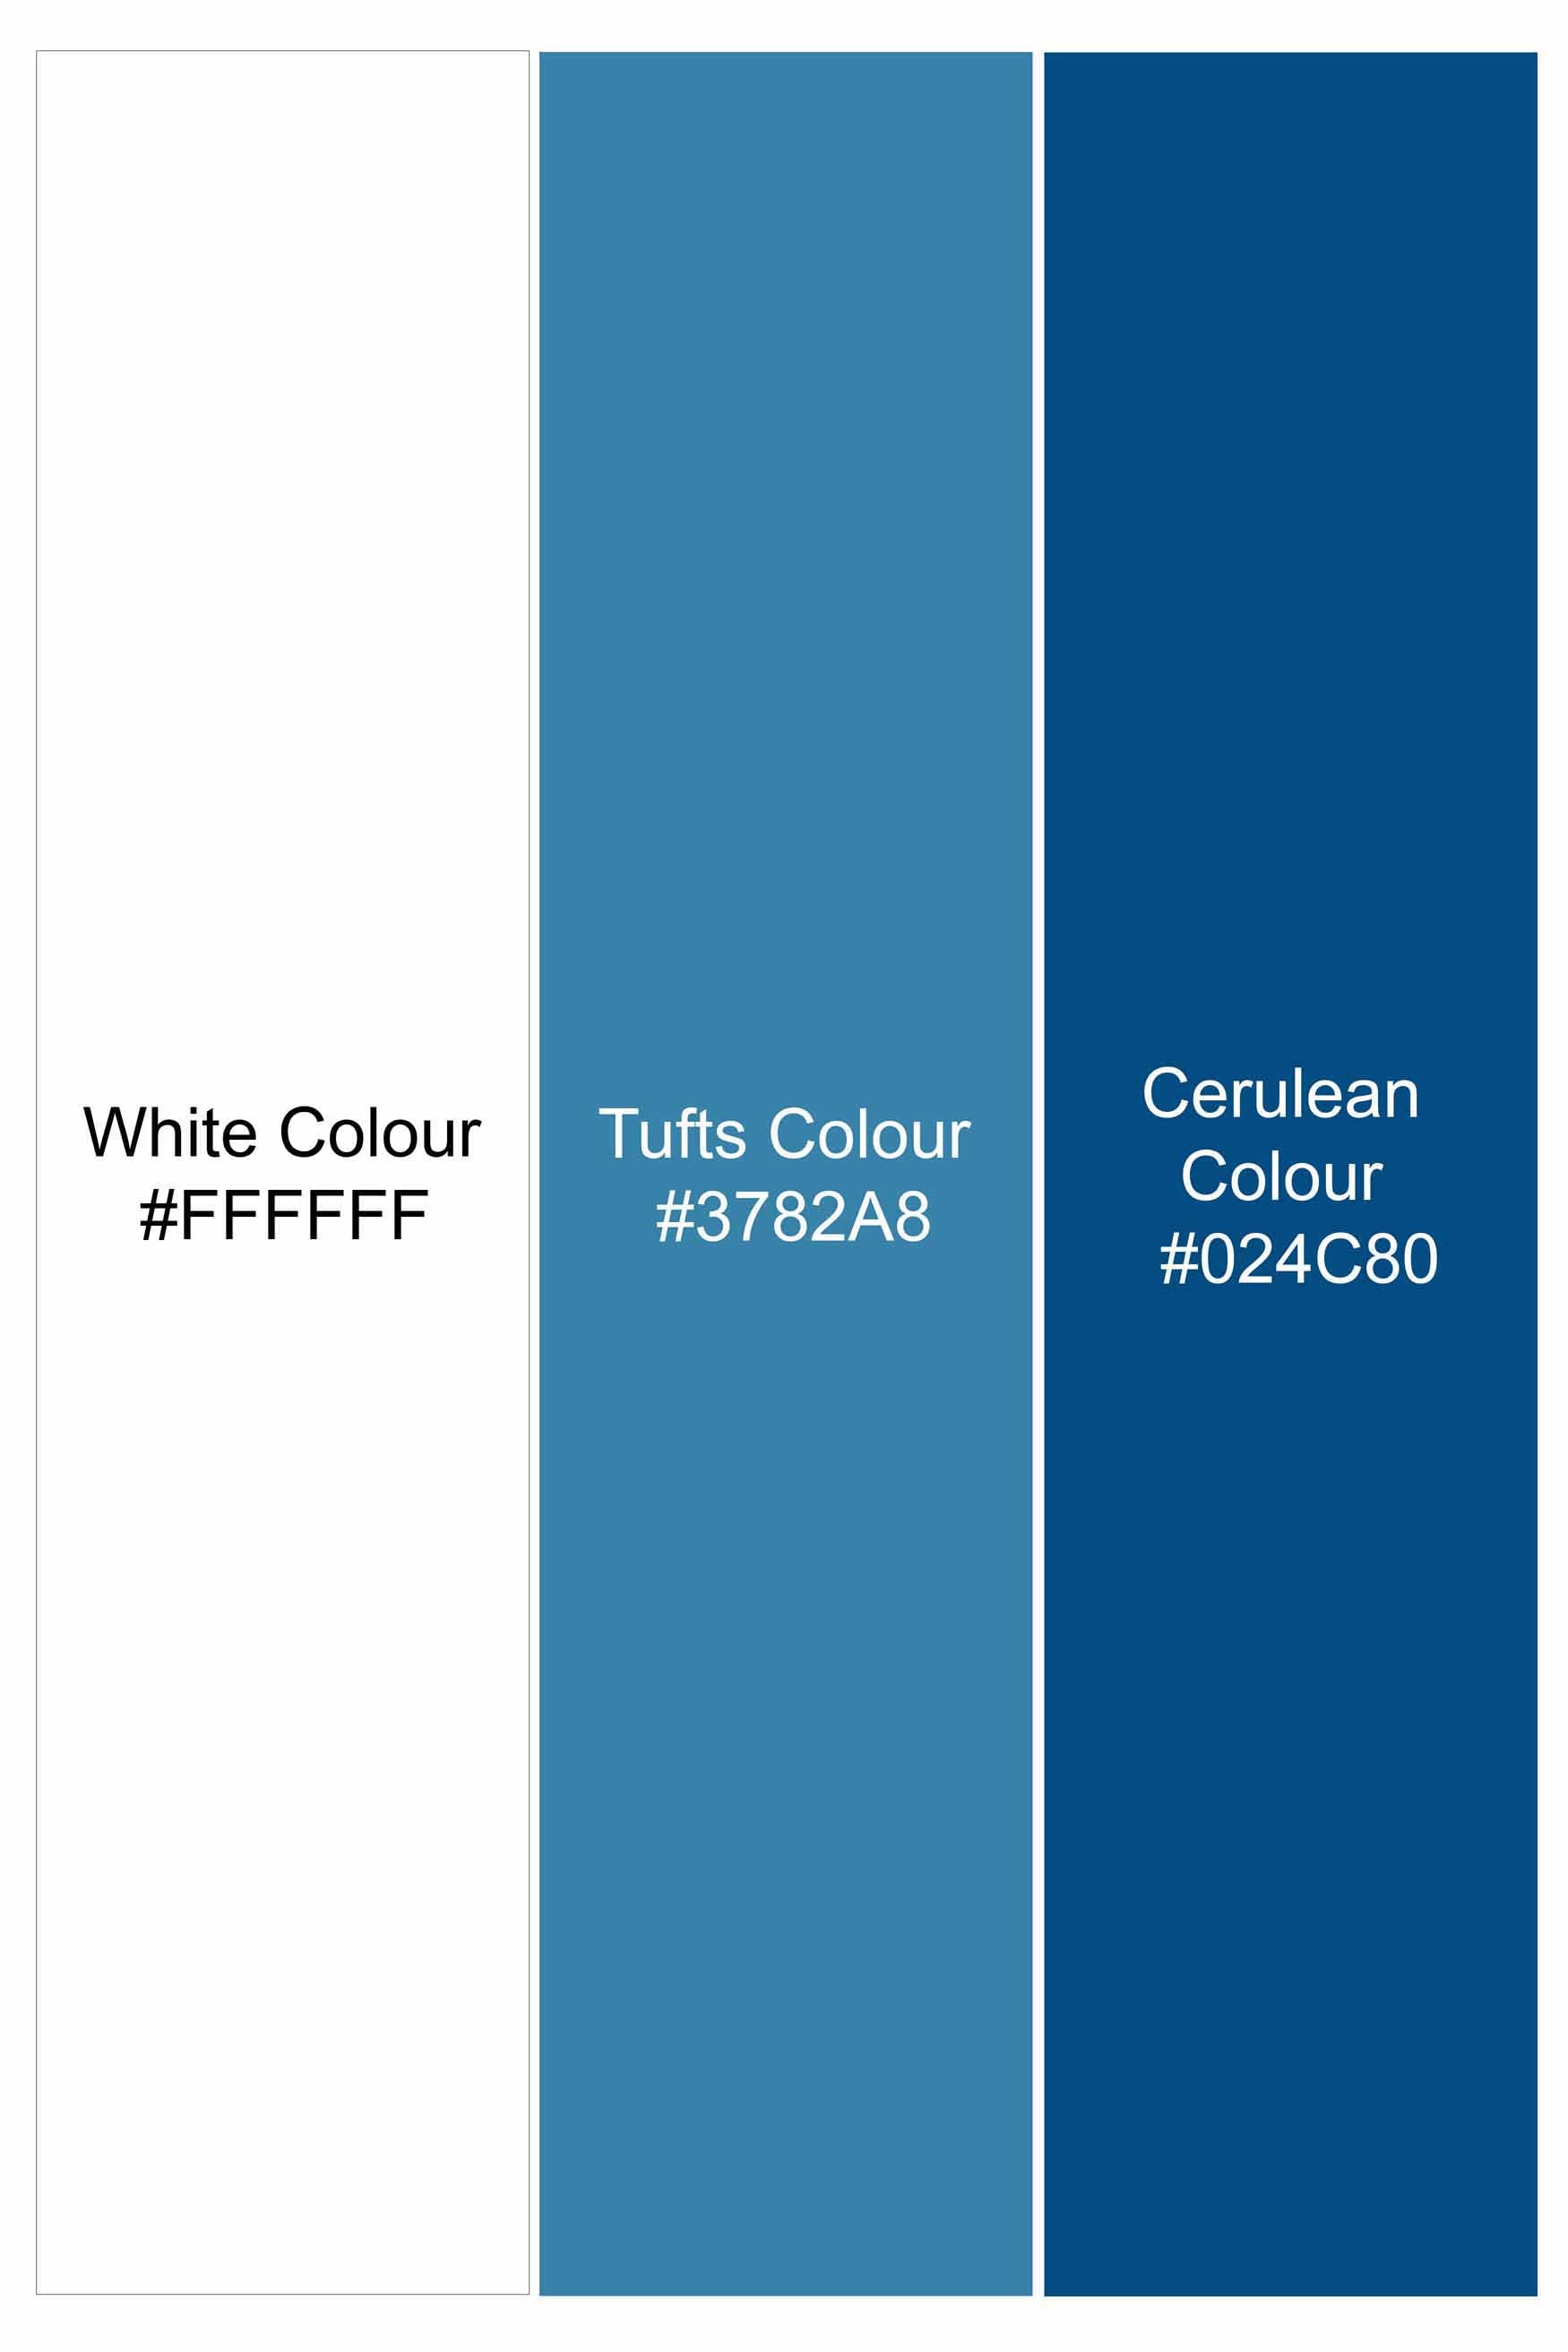 Bright White with Tufts Blue Plaid Premium Cotton Shirt 11574-38, 11574-H-38, 11574-39, 11574-H-39, 11574-40, 11574-H-40, 11574-42, 11574-H-42, 11574-44, 11574-H-44, 11574-46, 11574-H-46, 11574-48, 11574-H-48, 11574-50, 11574-H-50, 11574-52, 11574-H-52